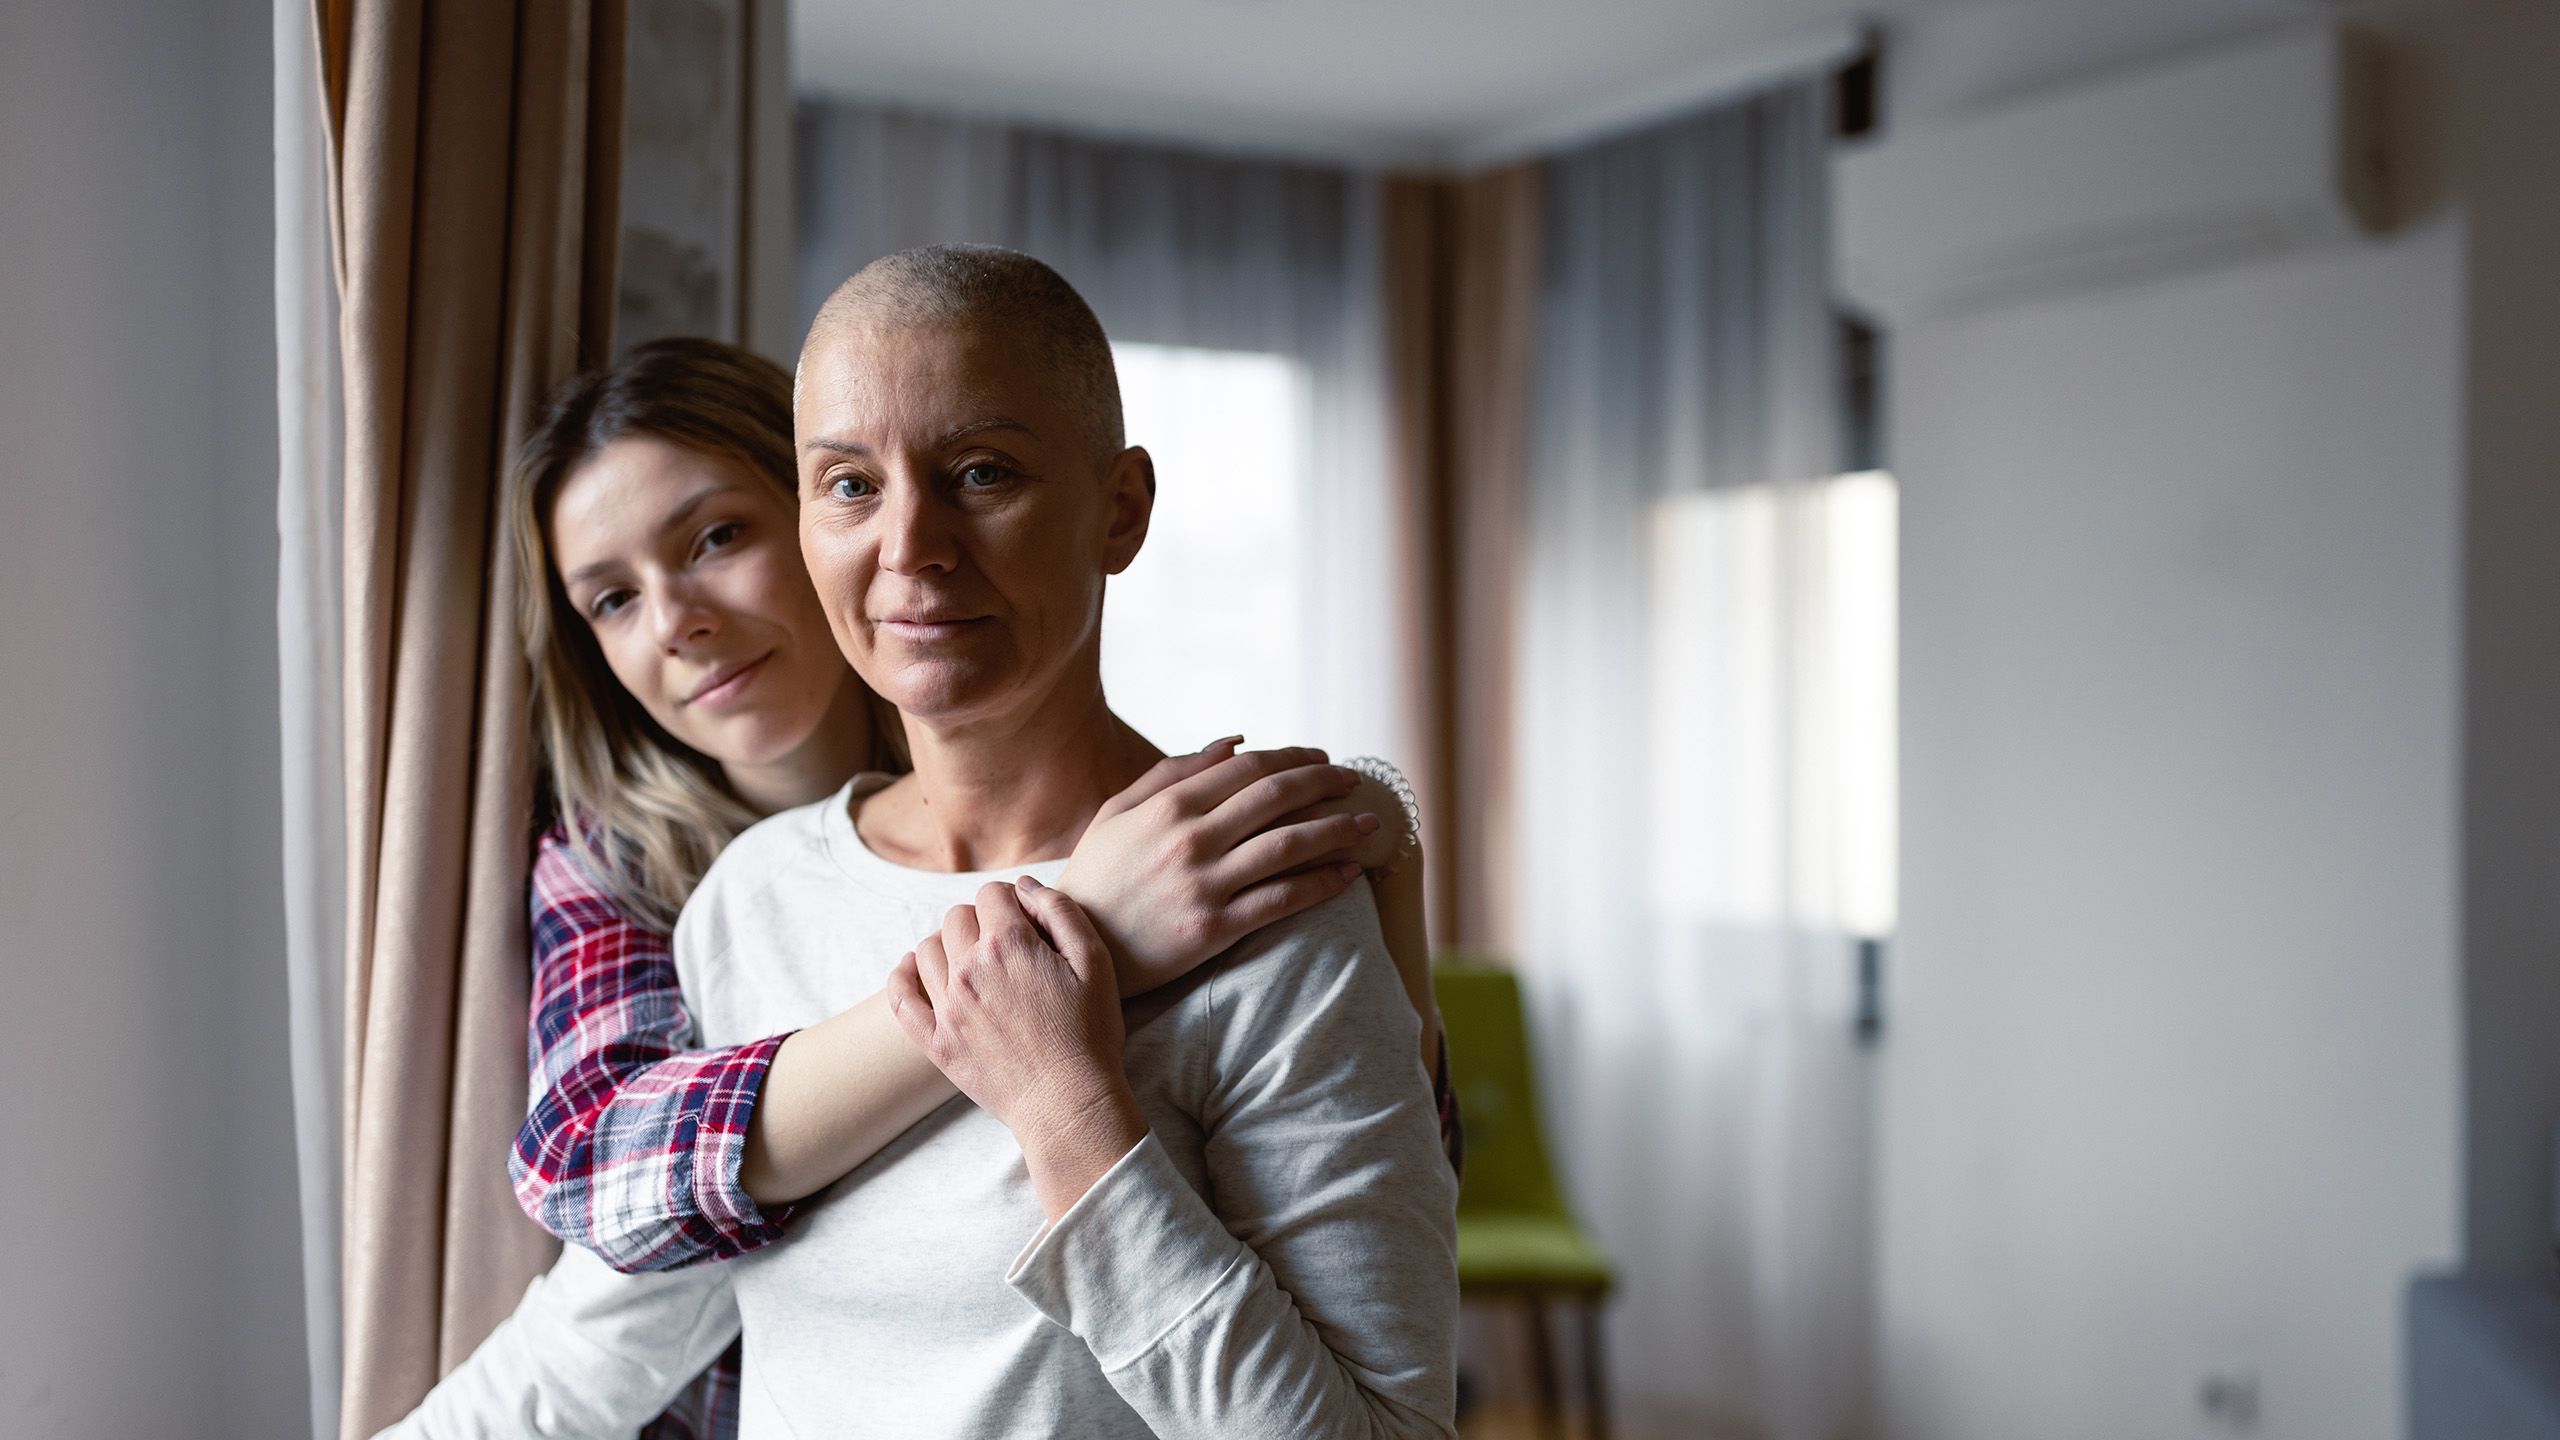 Cancer survivor and her daughter